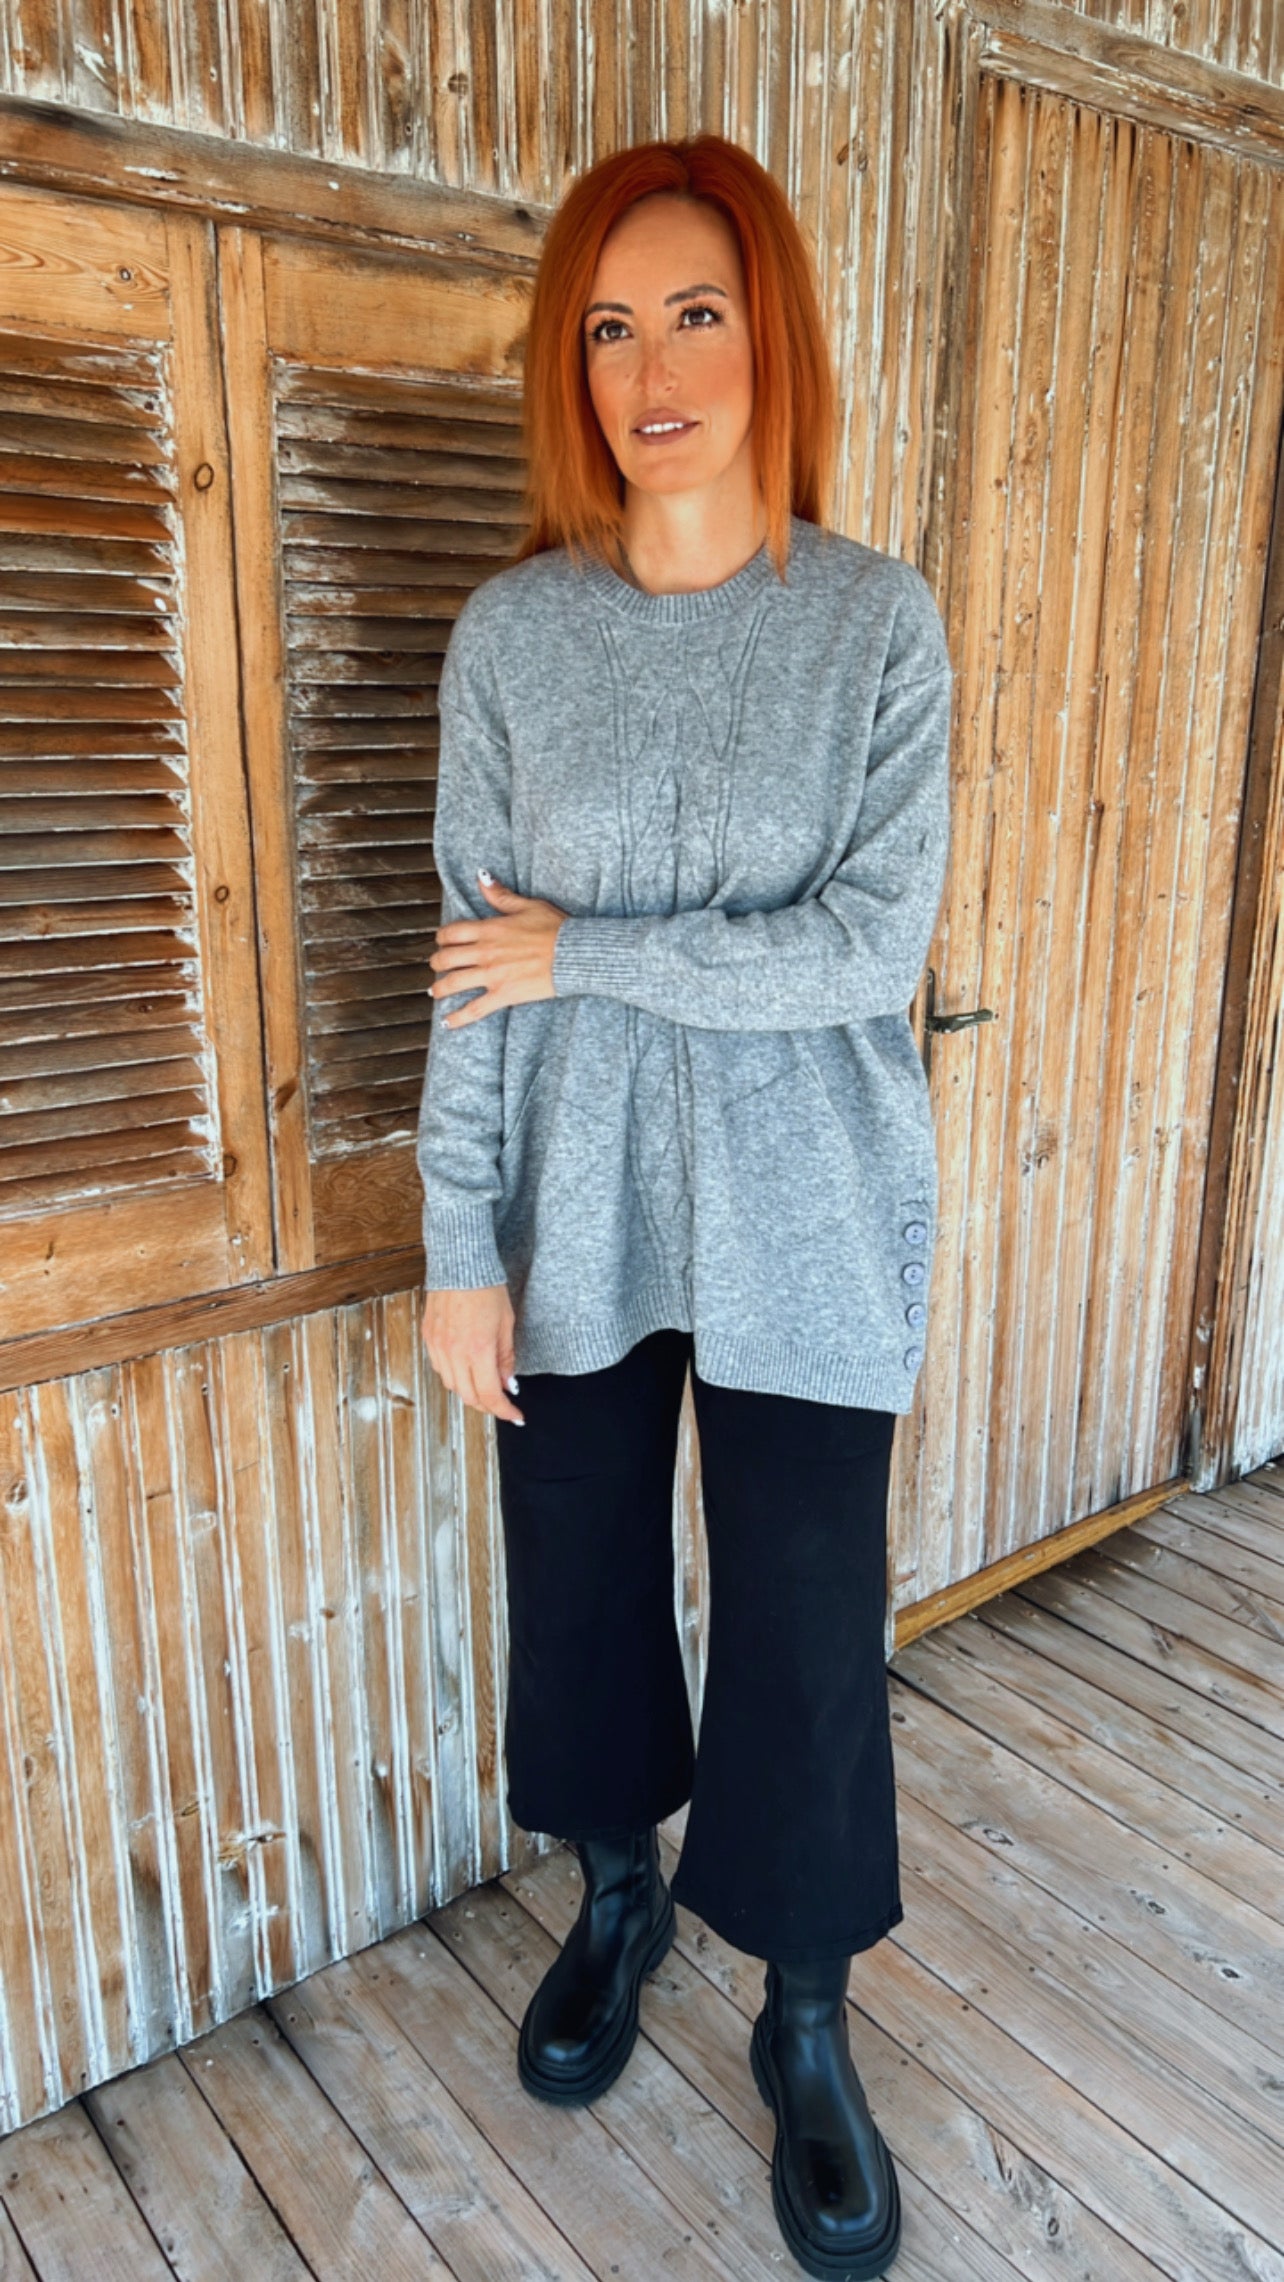 Tiffany Sweater Grey